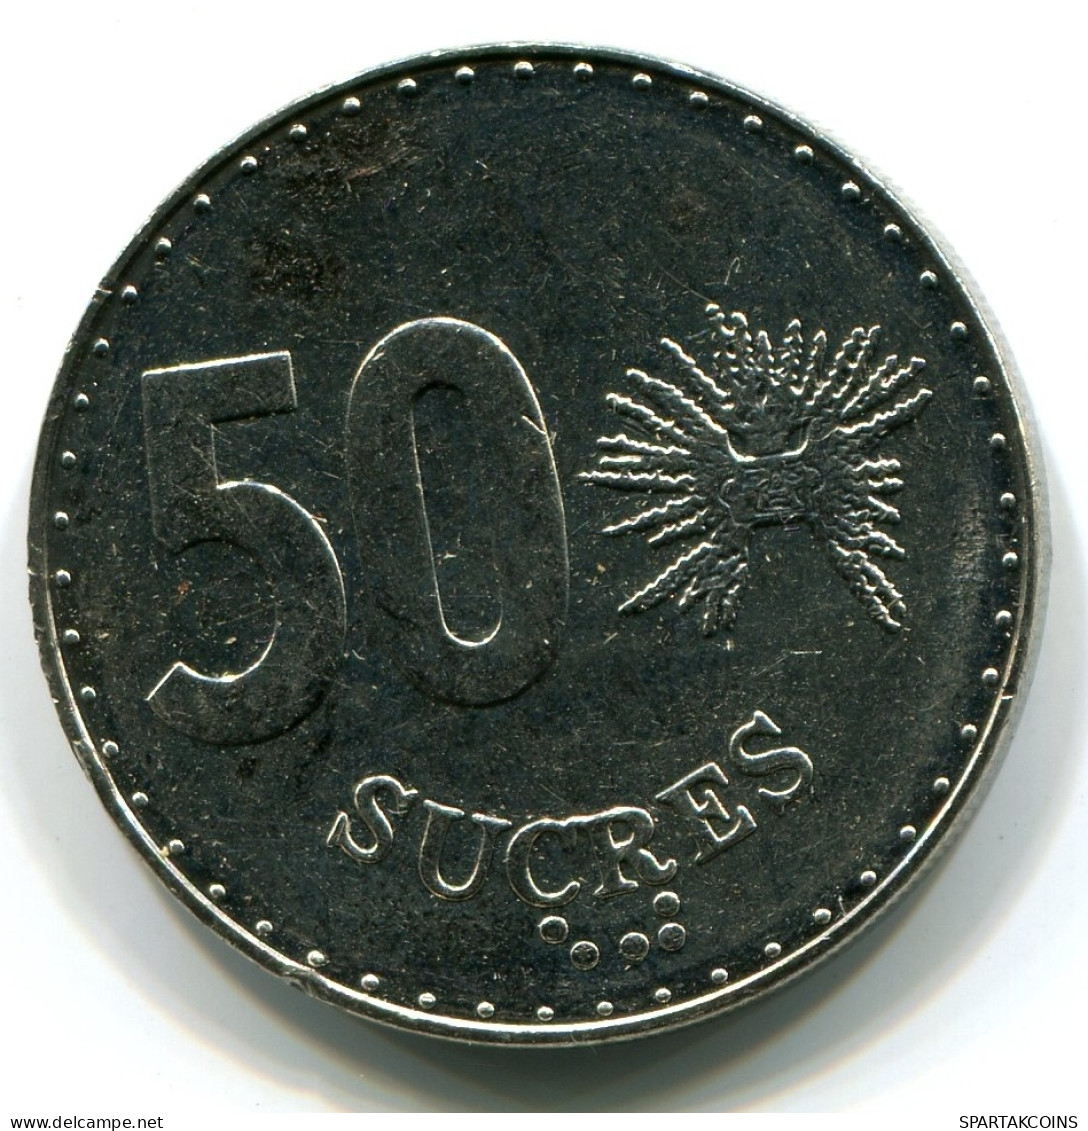 50 SUCRE 1991 ECUADOR UNC Coin #W11019.U - Ecuador